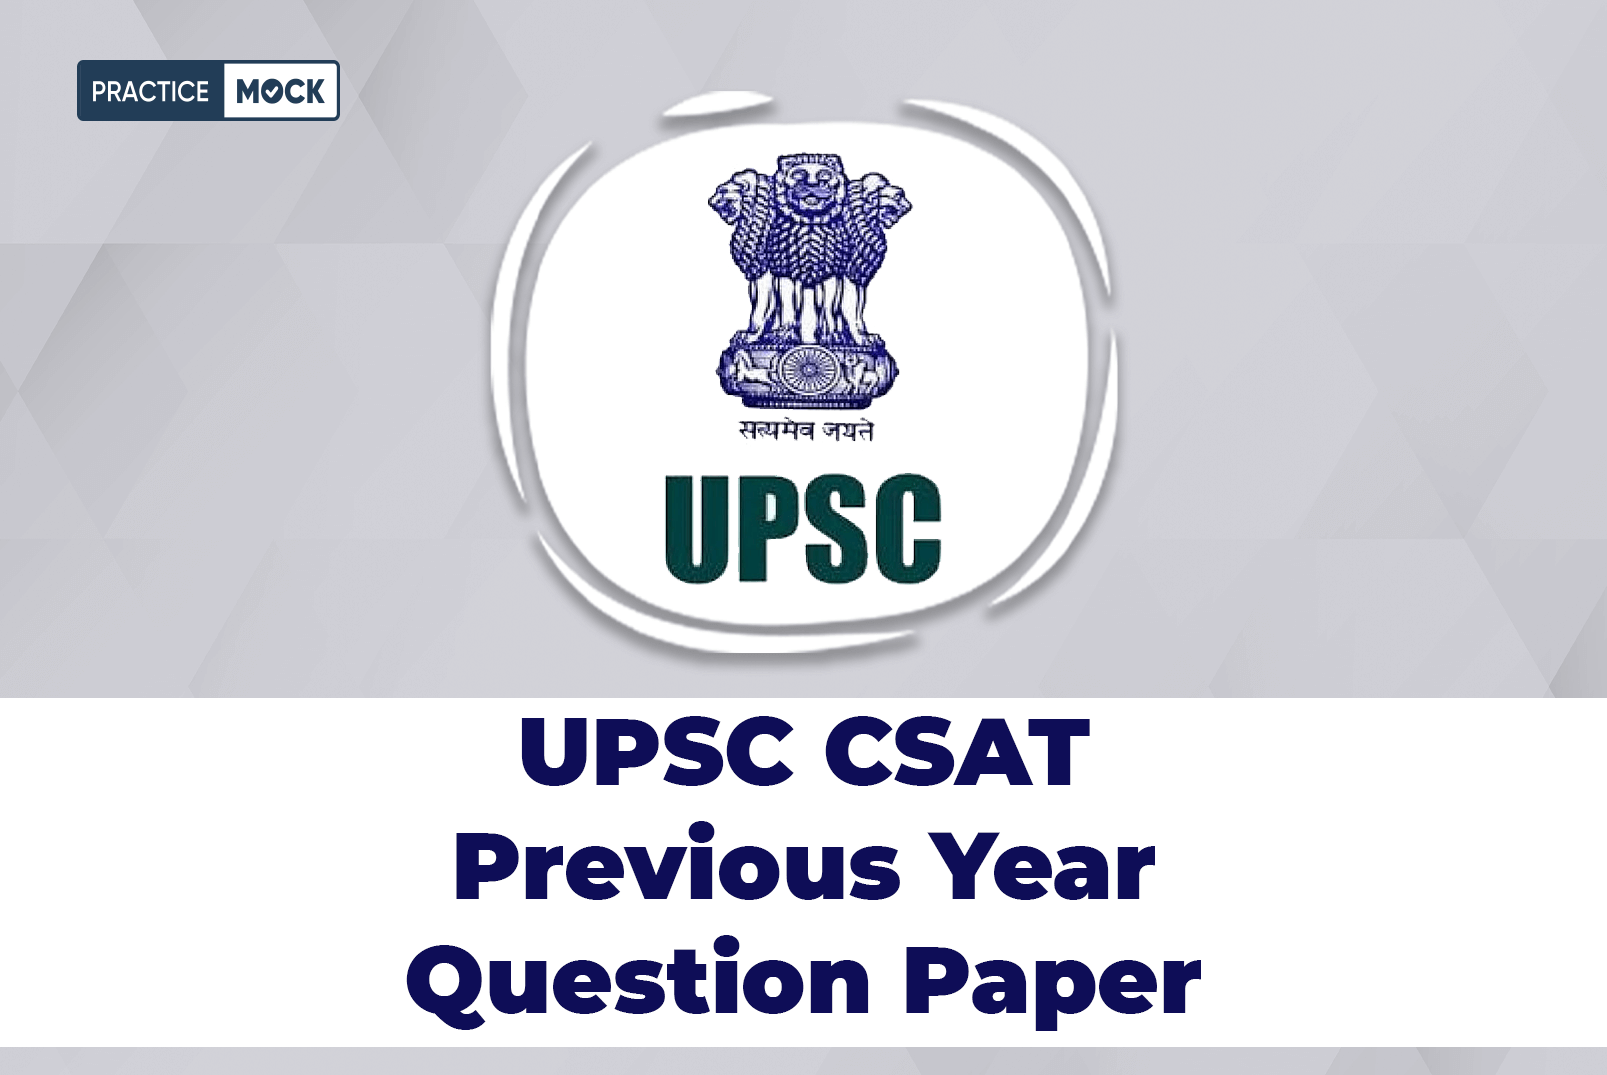 UPSC CSAT Previous Year Question Paper